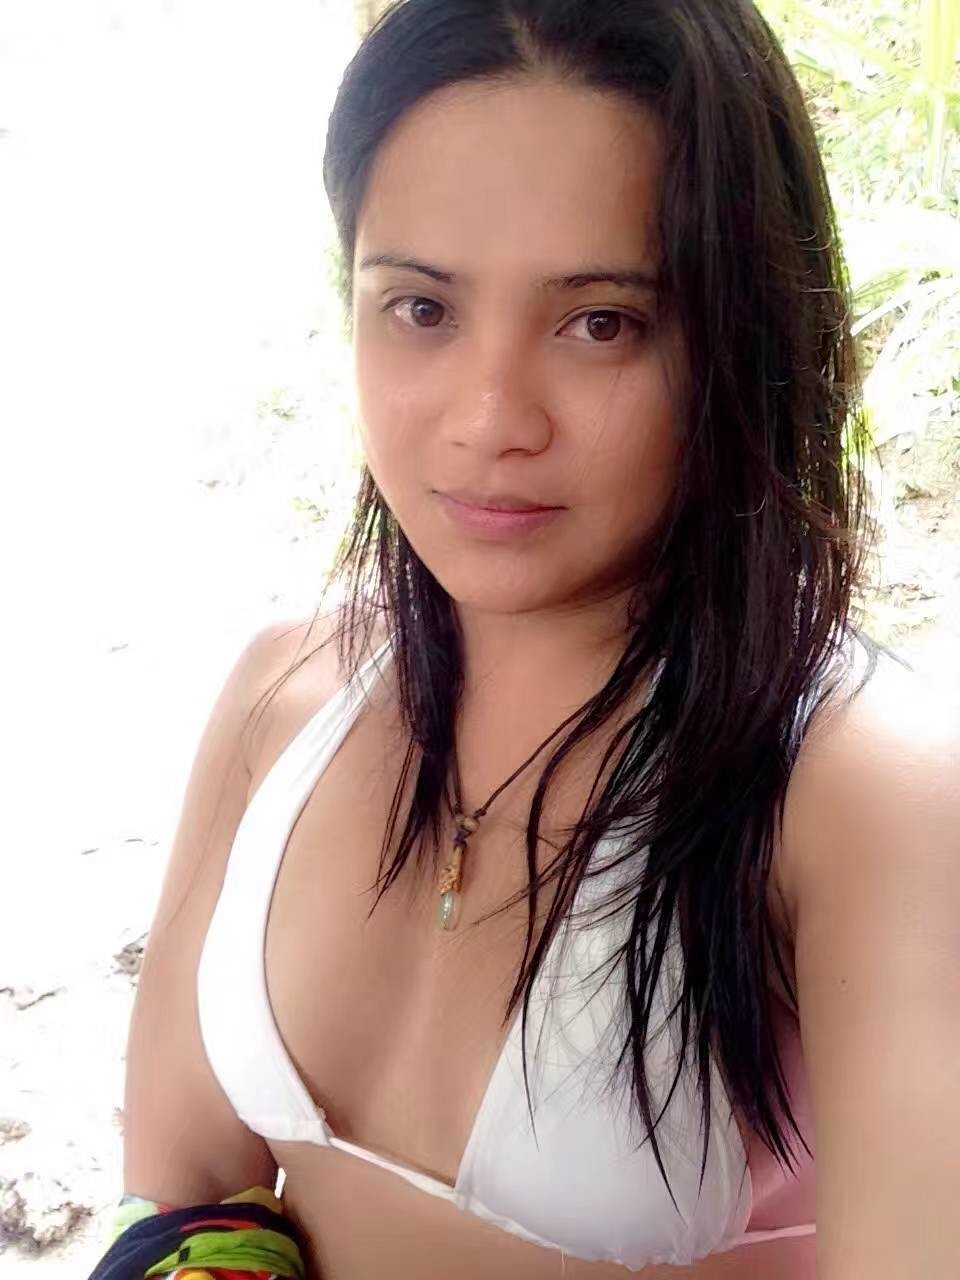 Sexyhot filipina whores free porno